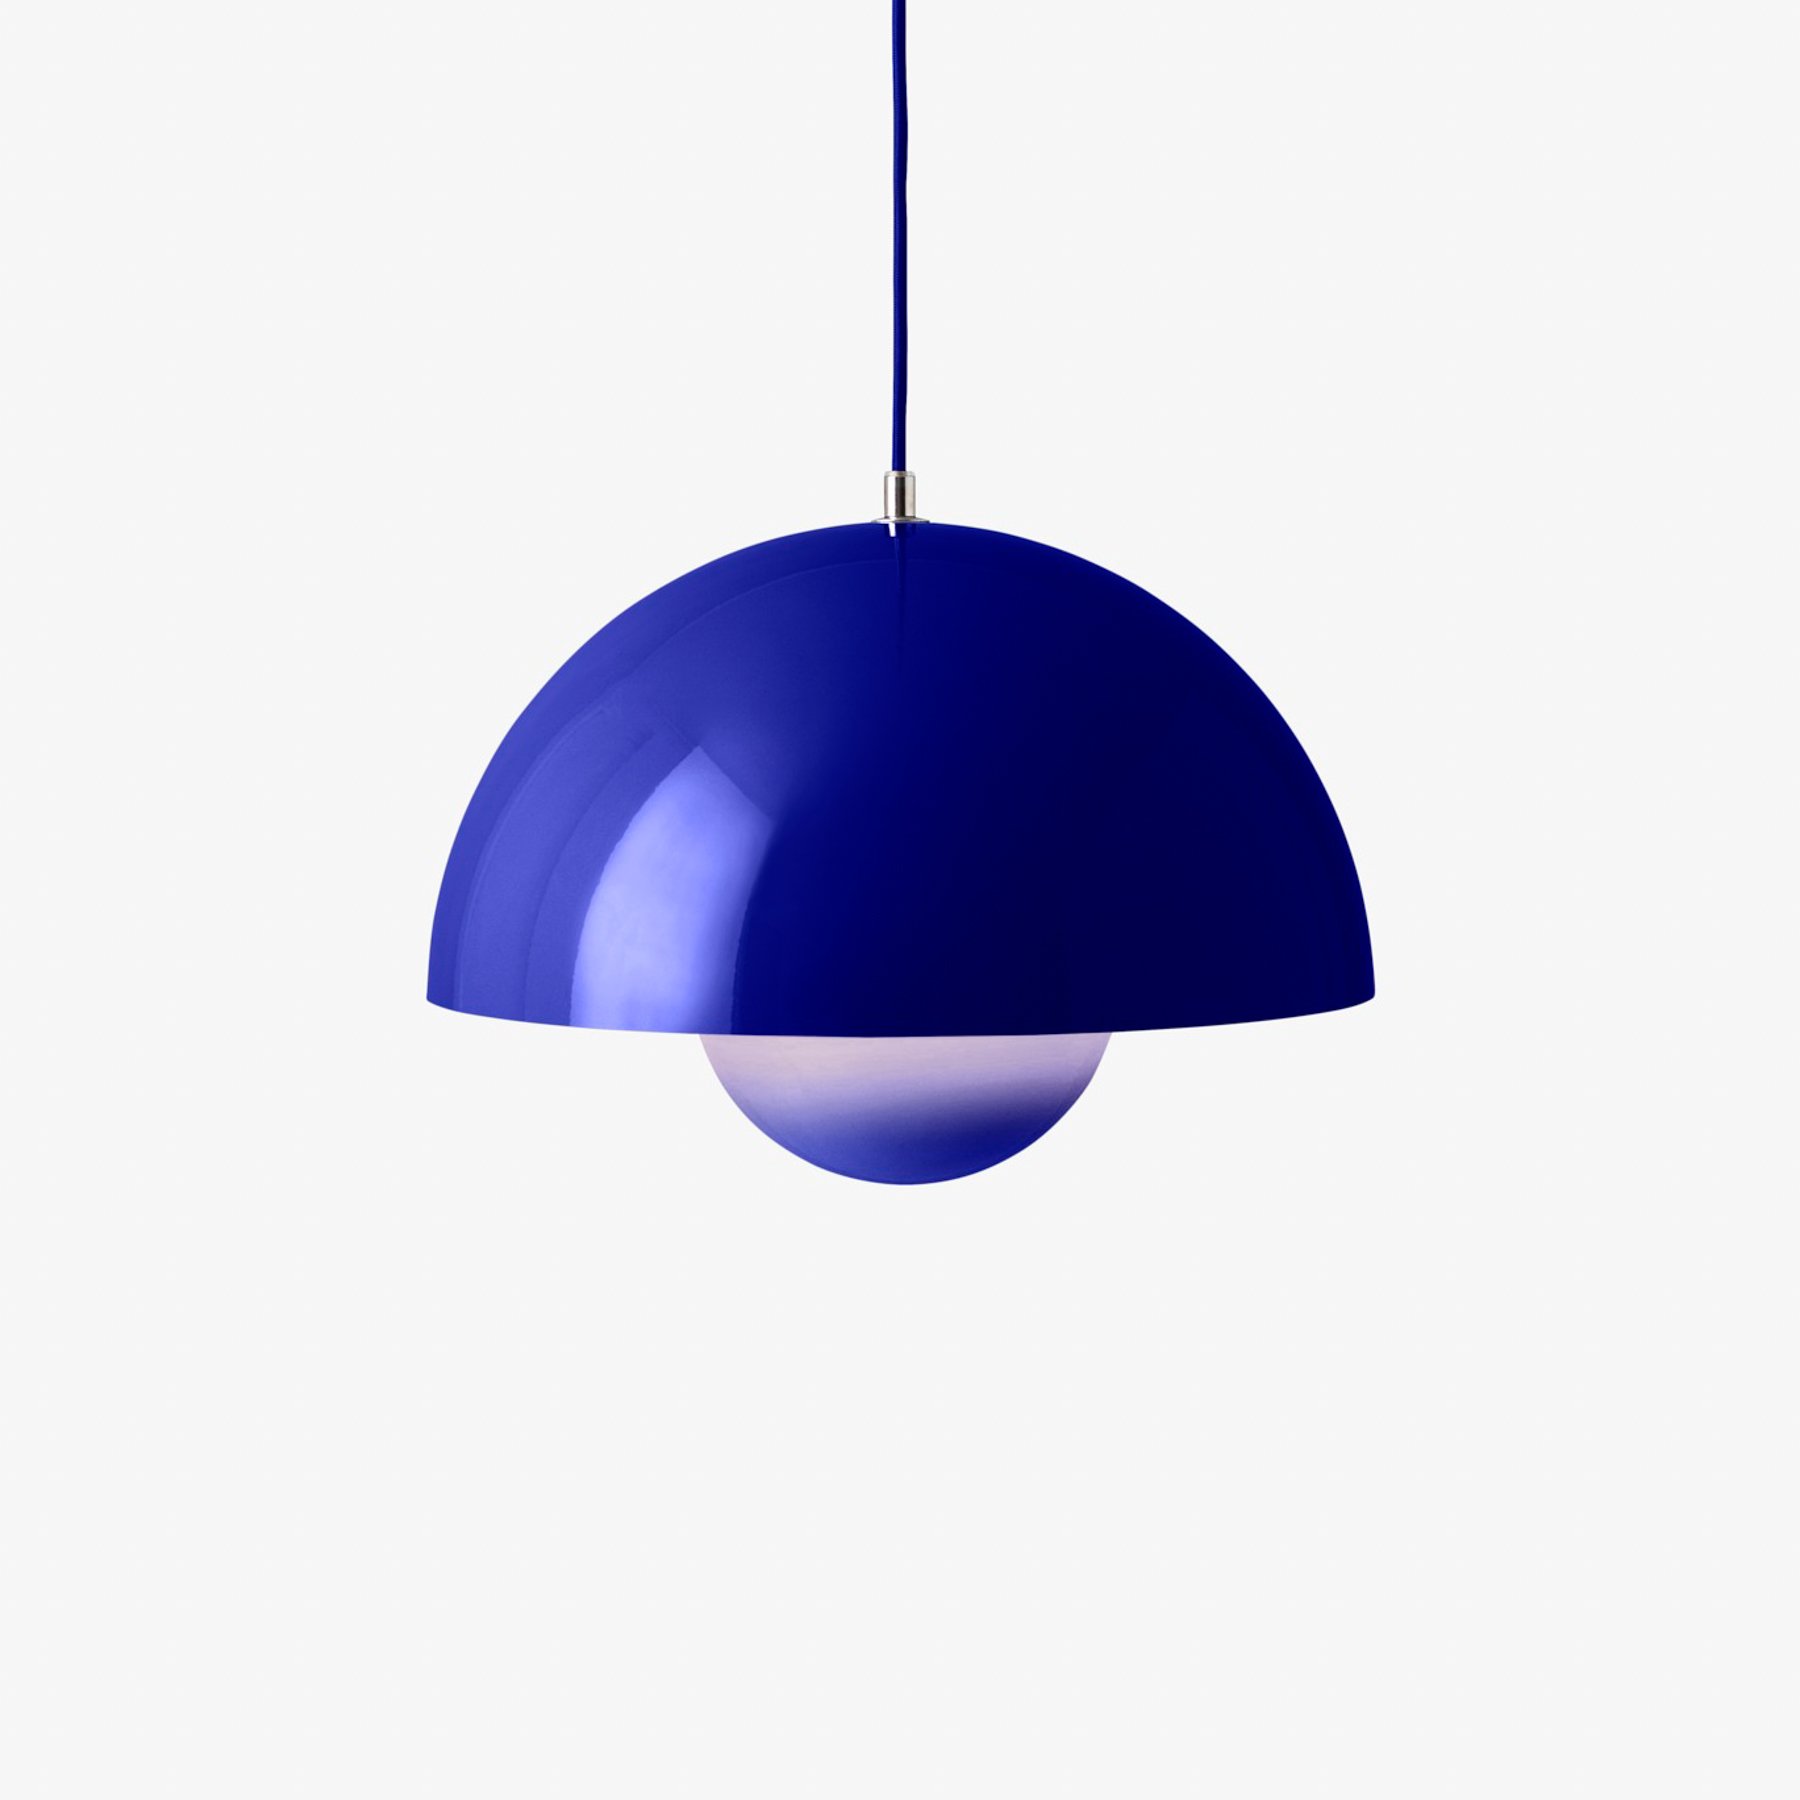 &Tradition hanglamp Bloempot VP7, Ø 37 cm, kobaltblauw